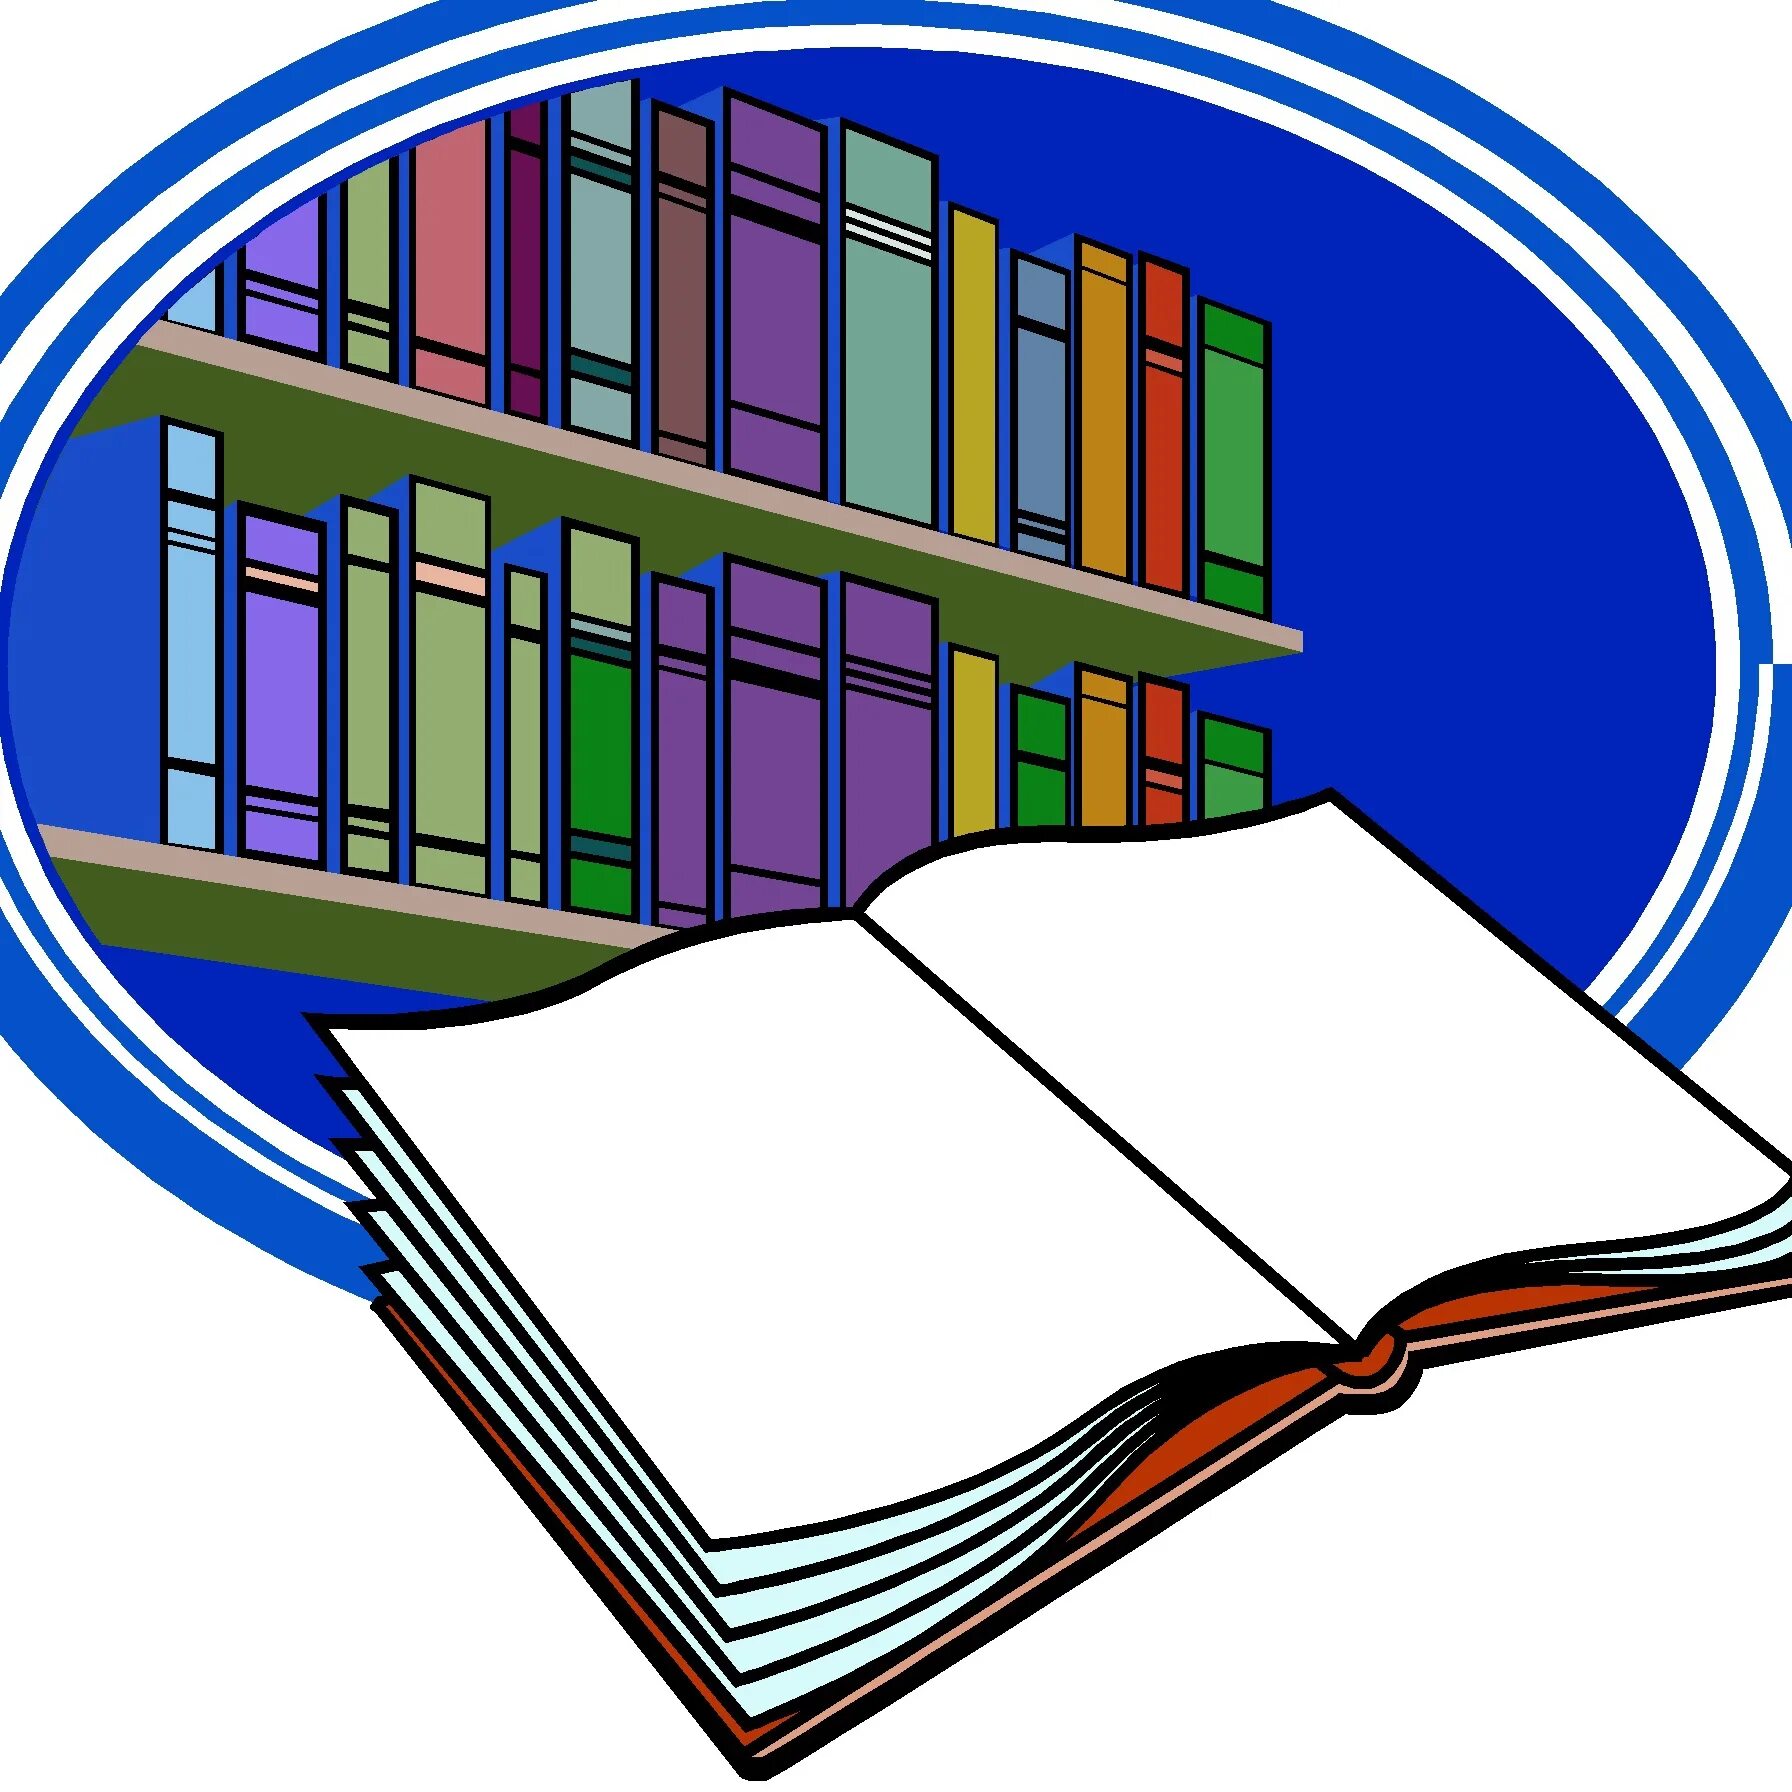 Логотип библиотеки. Библиотека картинки. Библиотека иллюстрация. Логотип школьной библиотеки. Слова на тему книга и библиотека